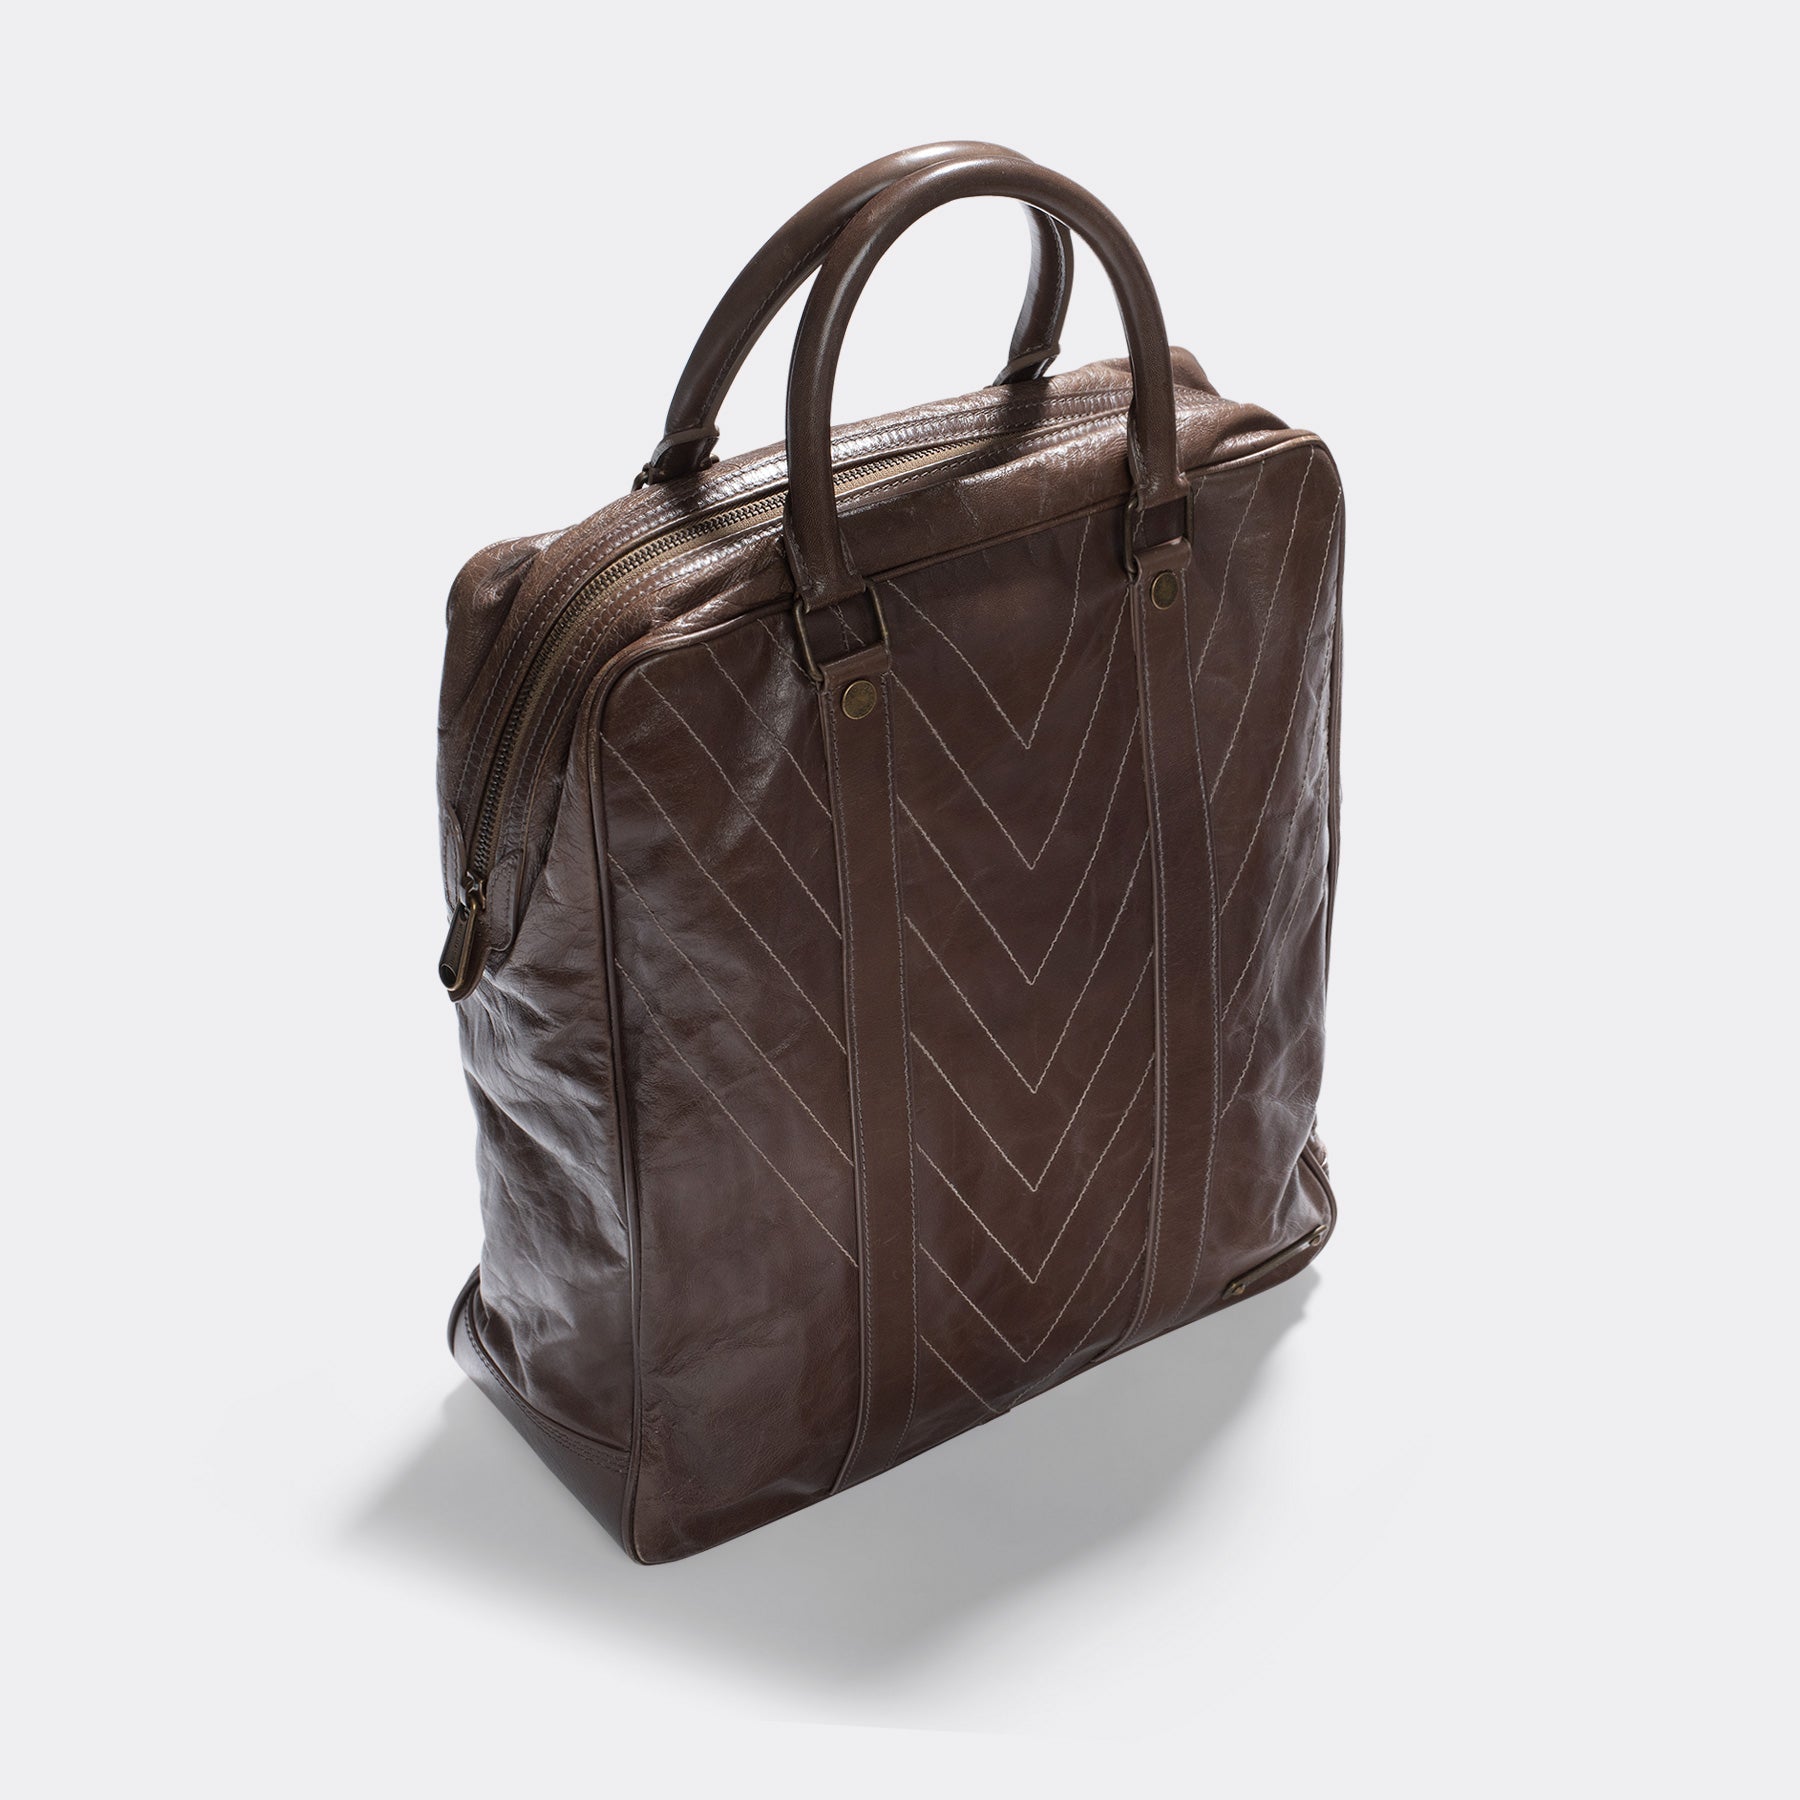 Louis Vuitton Soana Sacoche Limited Edition Kangaroo Bag